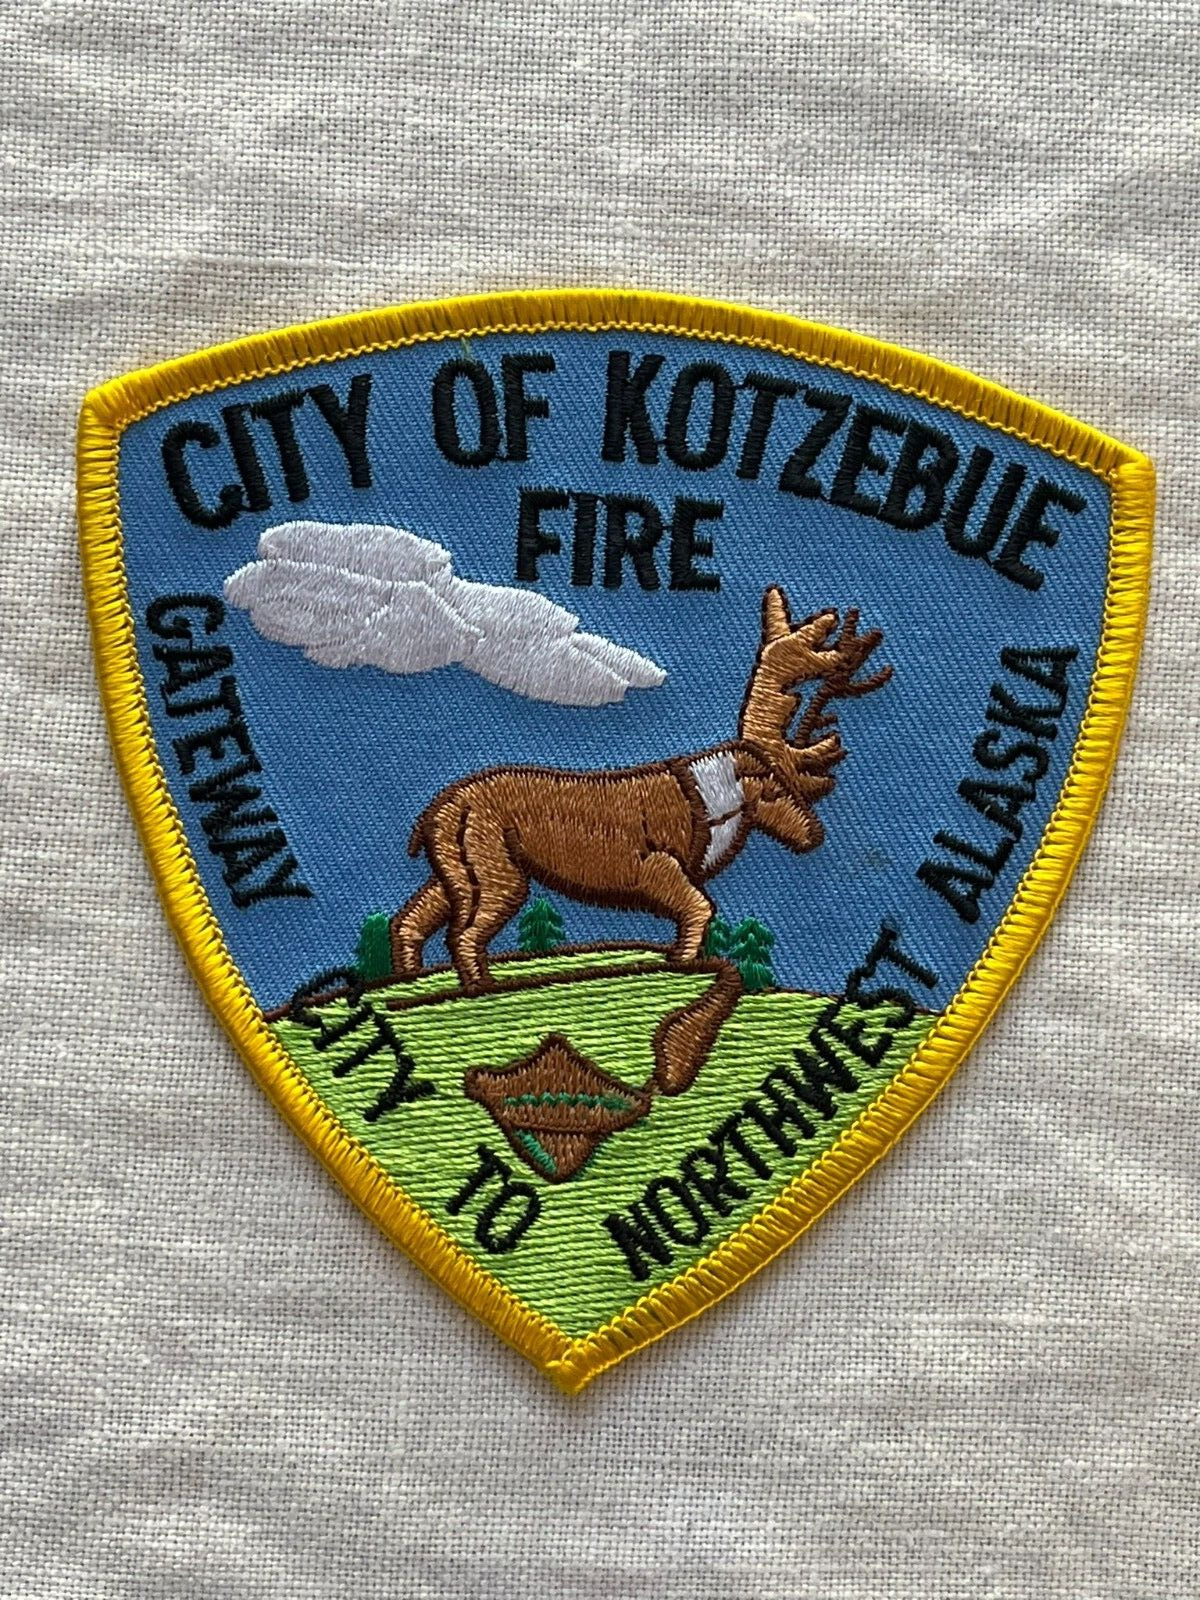 CITY OF KOTZEBUE FIRE GATEWAY CITY TO NORTHWEST ALASKA COLLECTIBLE PATCH